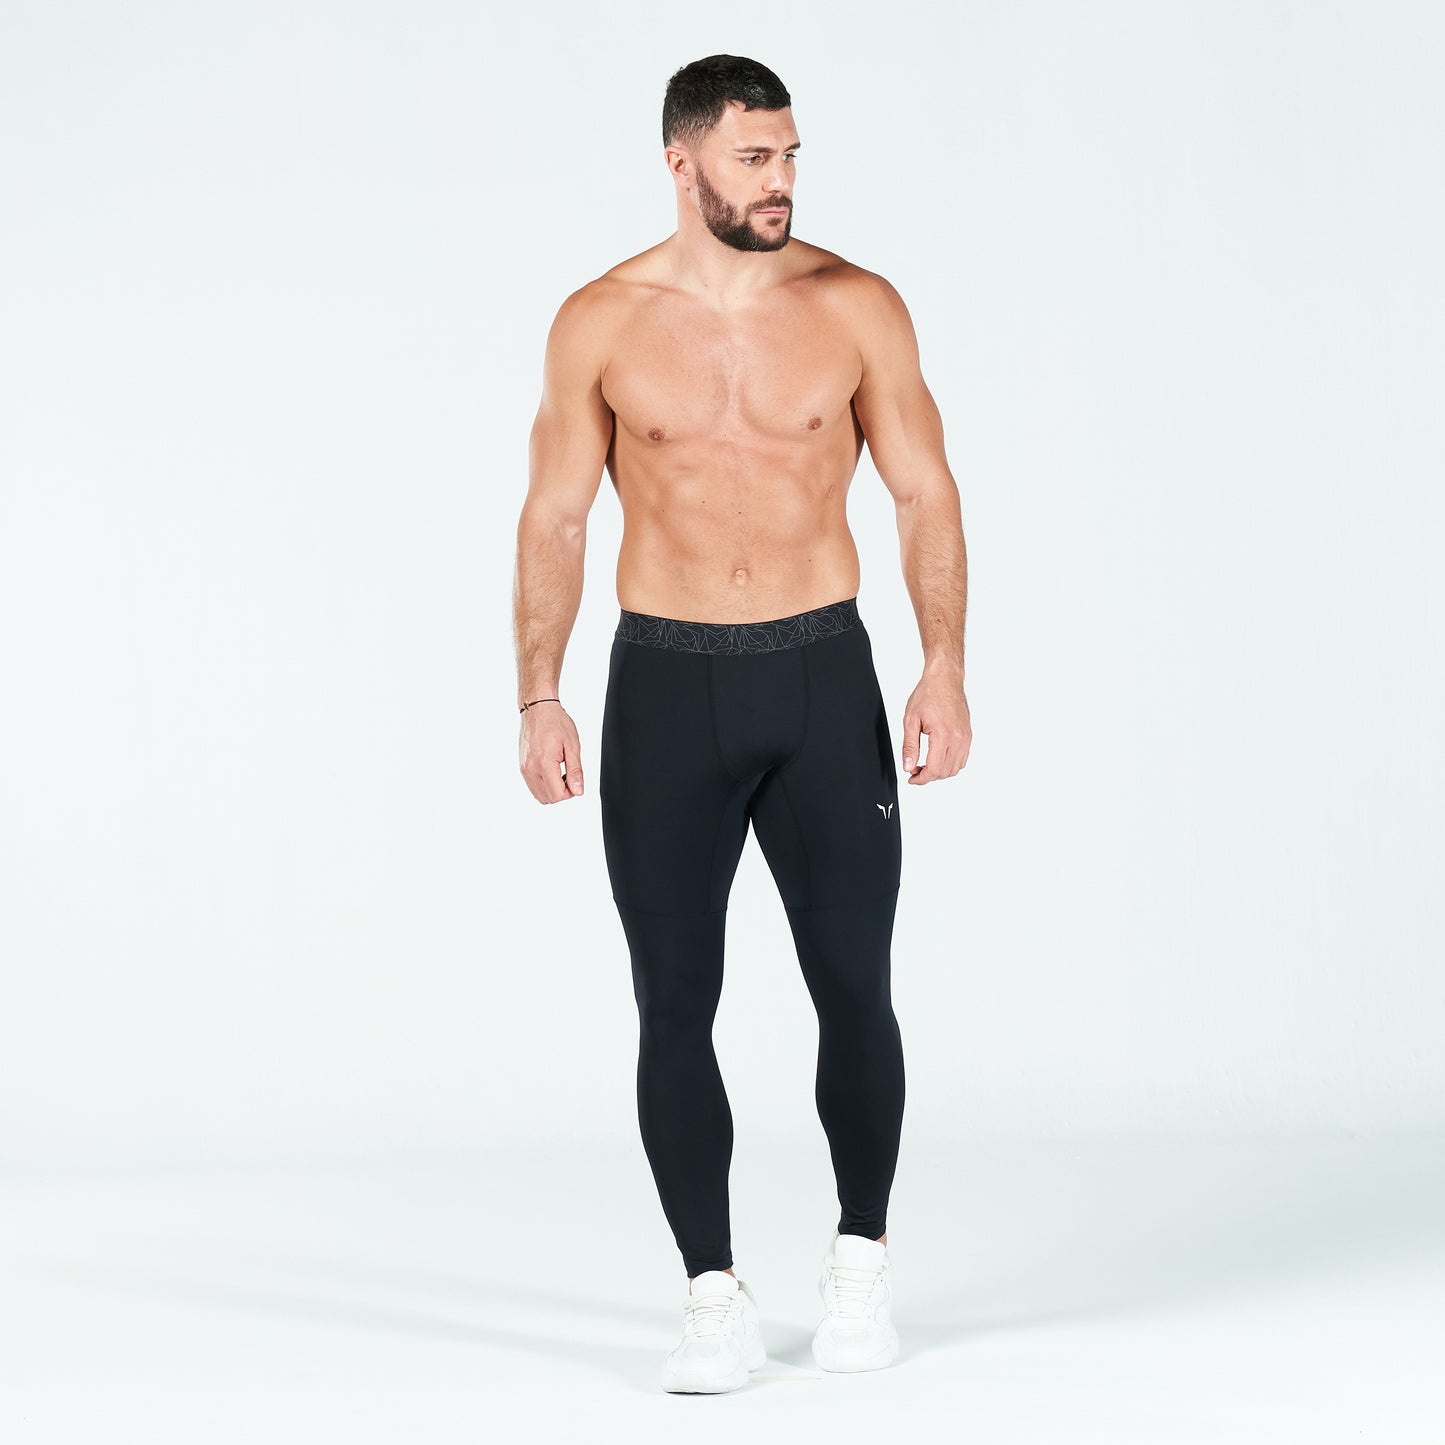 squatwolf-gym-wear-statement-dryflex-tights-black-workout-tights-for-men